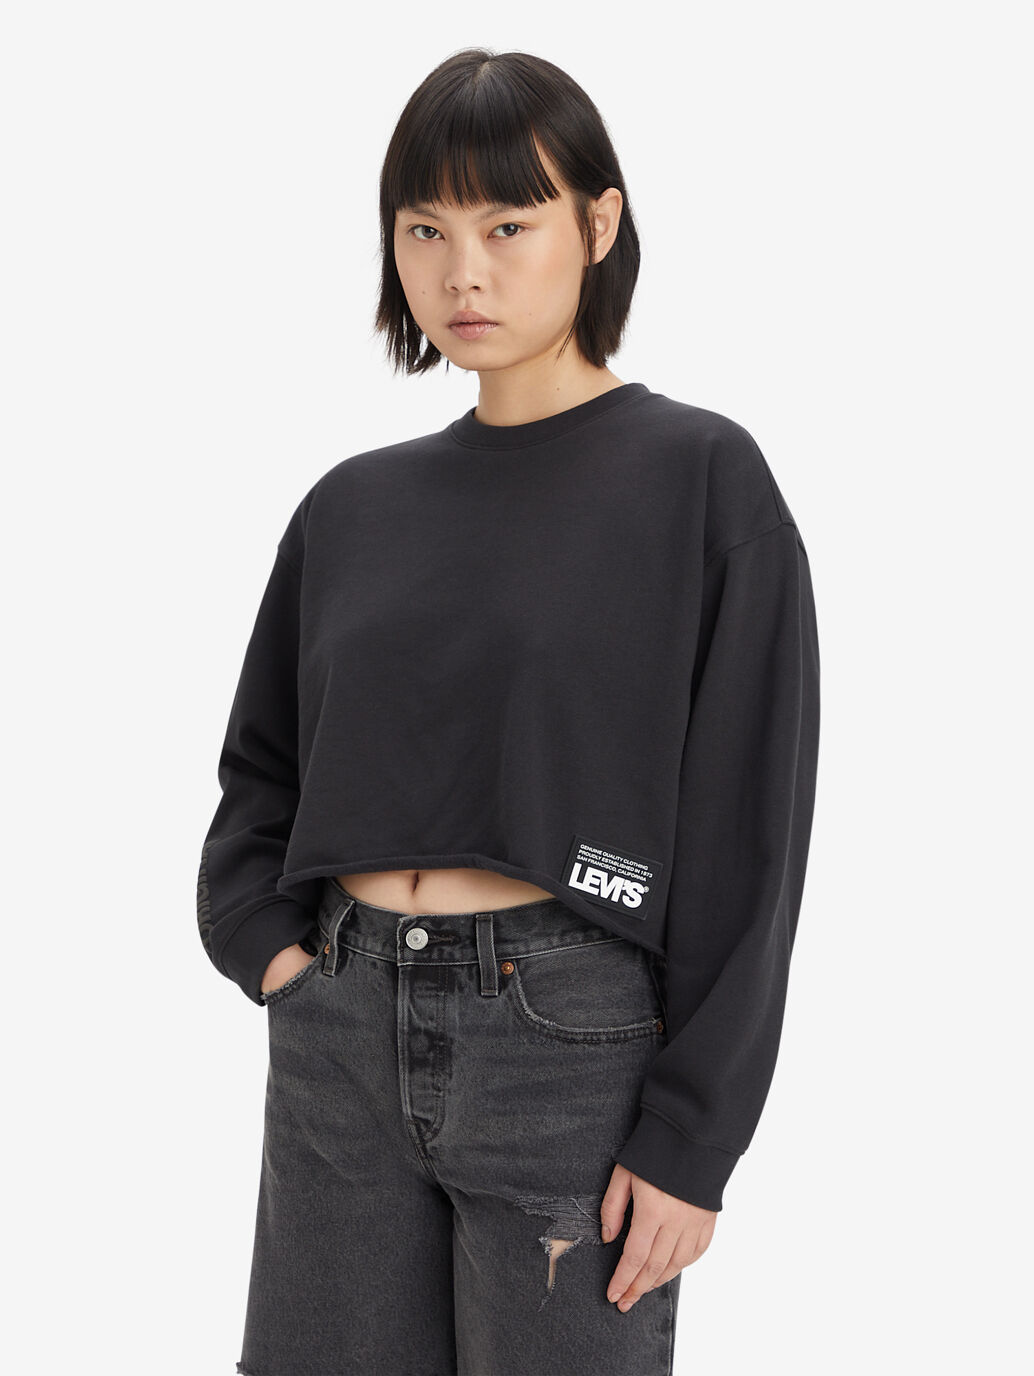 Black Carla Crew Sweatshirt for Women - With a Raw Hem